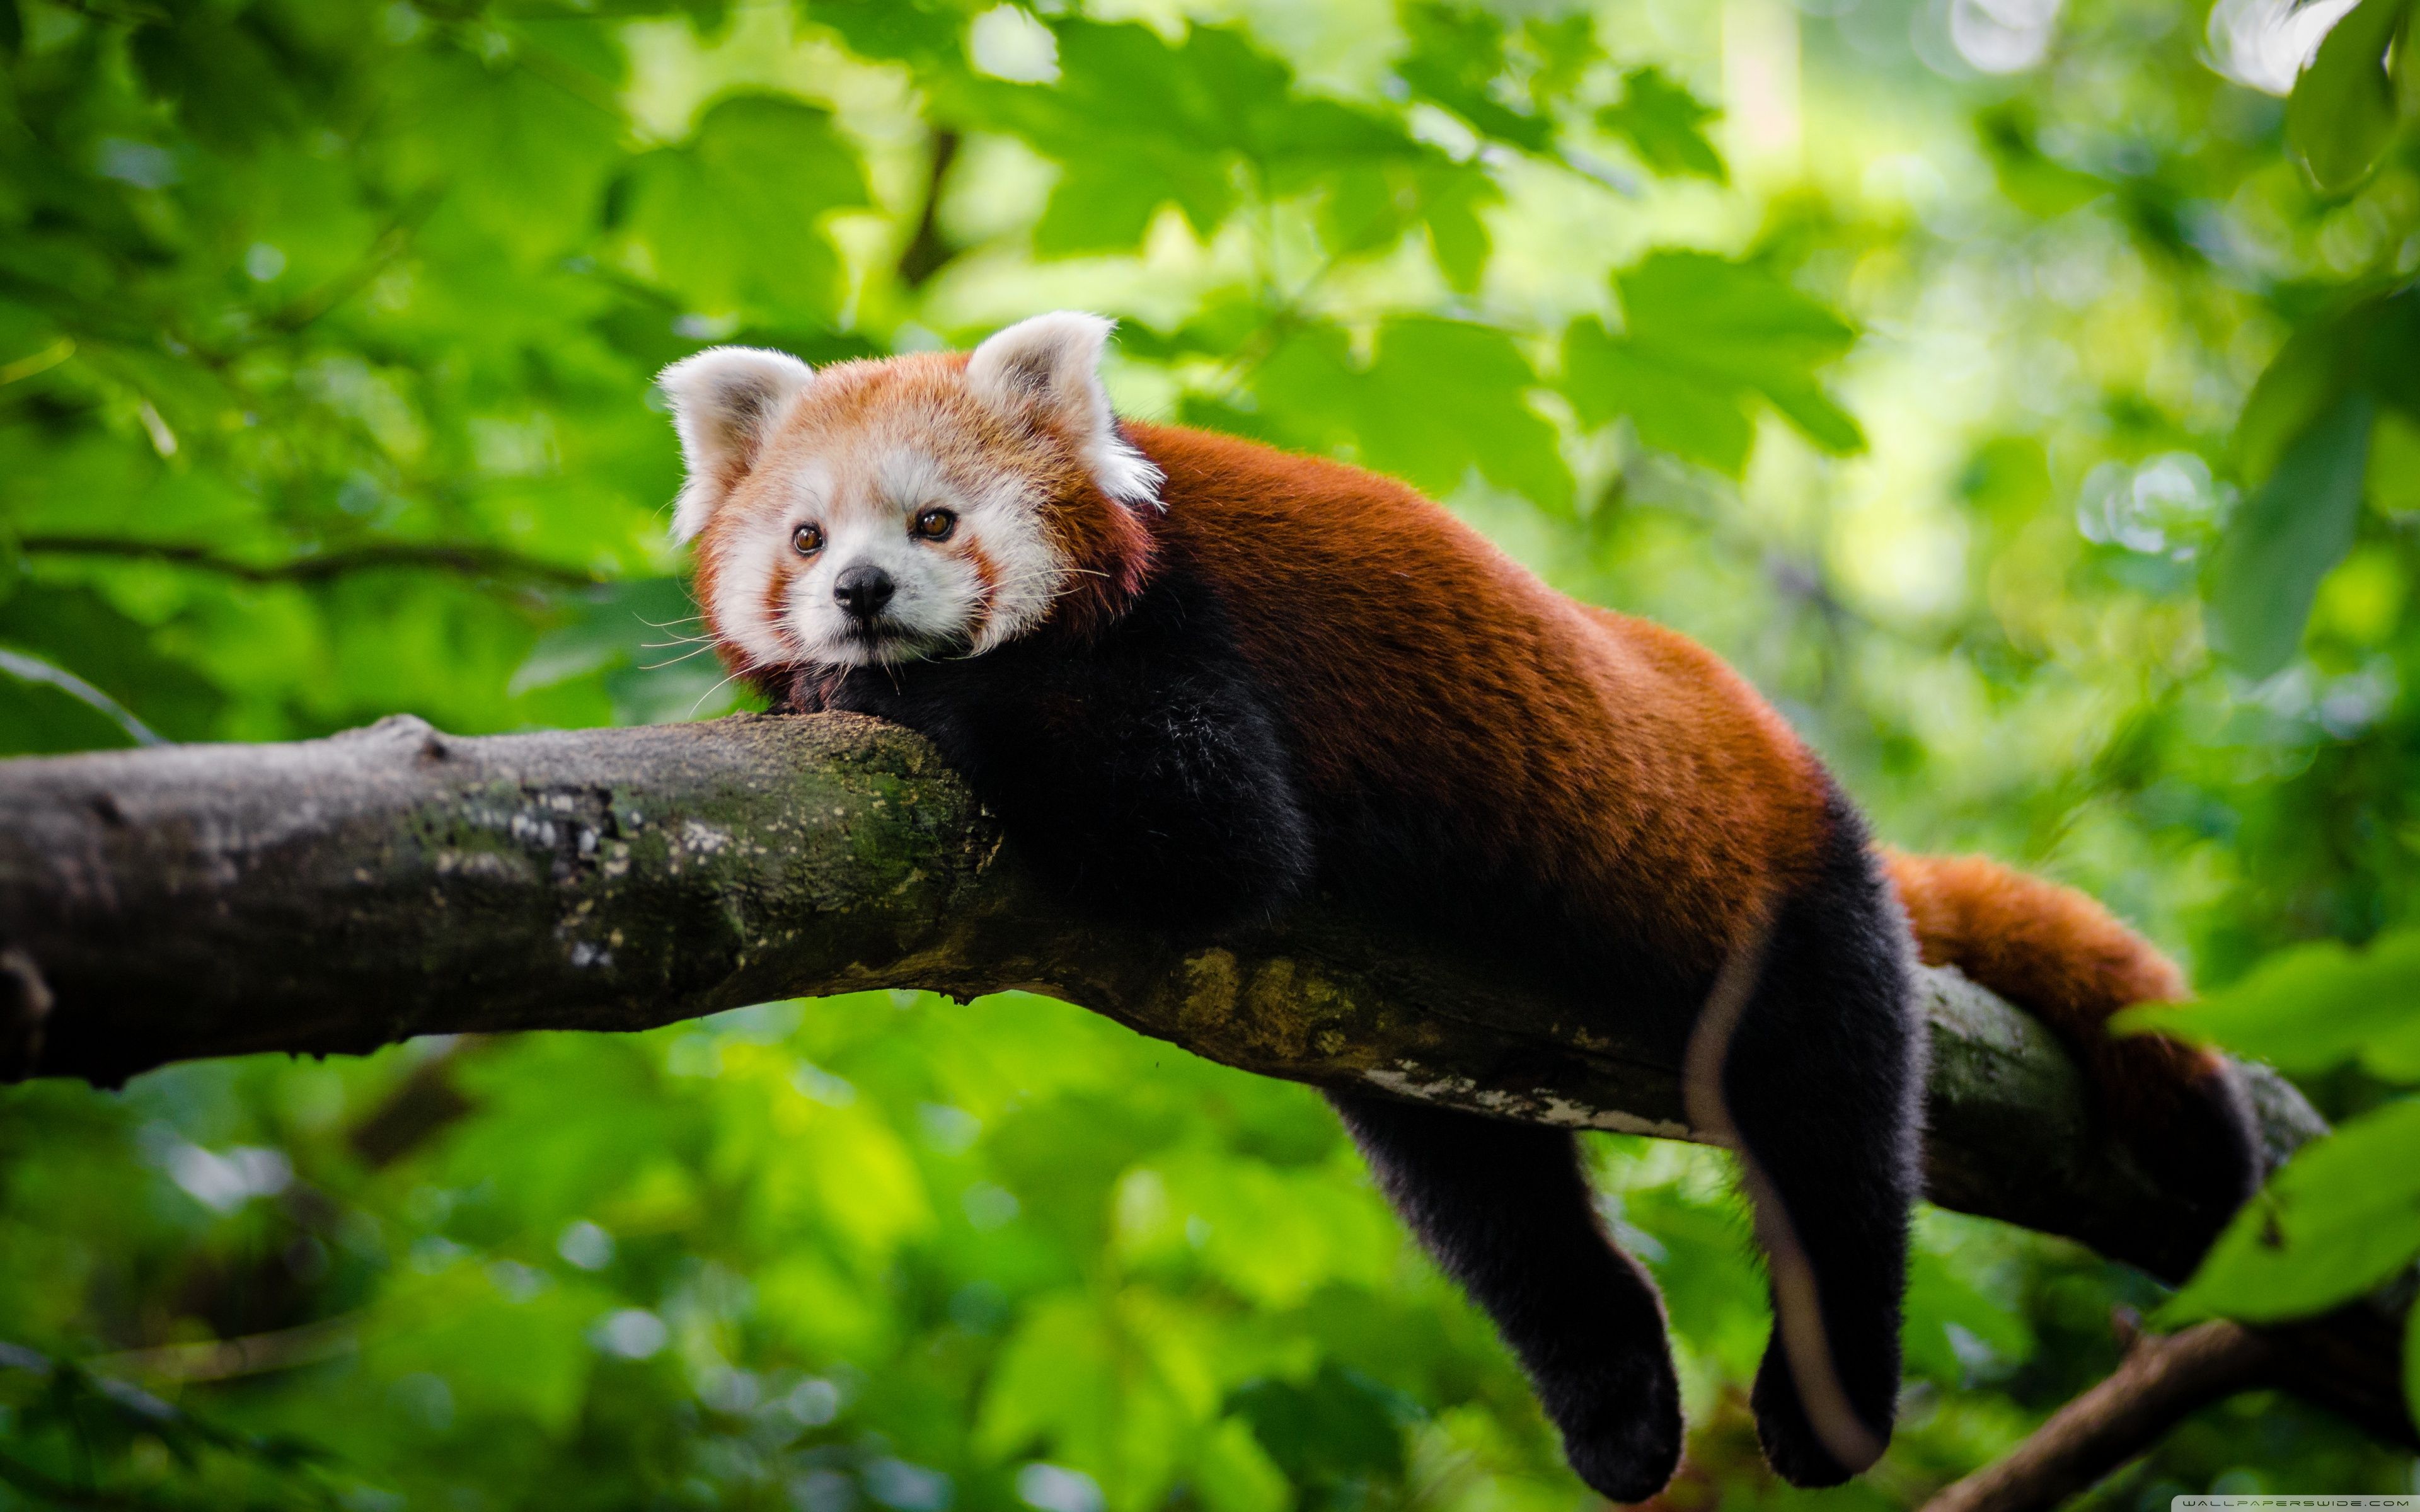 Download wallpapers 4k Pandas zoo bears cute panda China sleeping  panda Ailuropoda for desktop free Pictures for desktop free